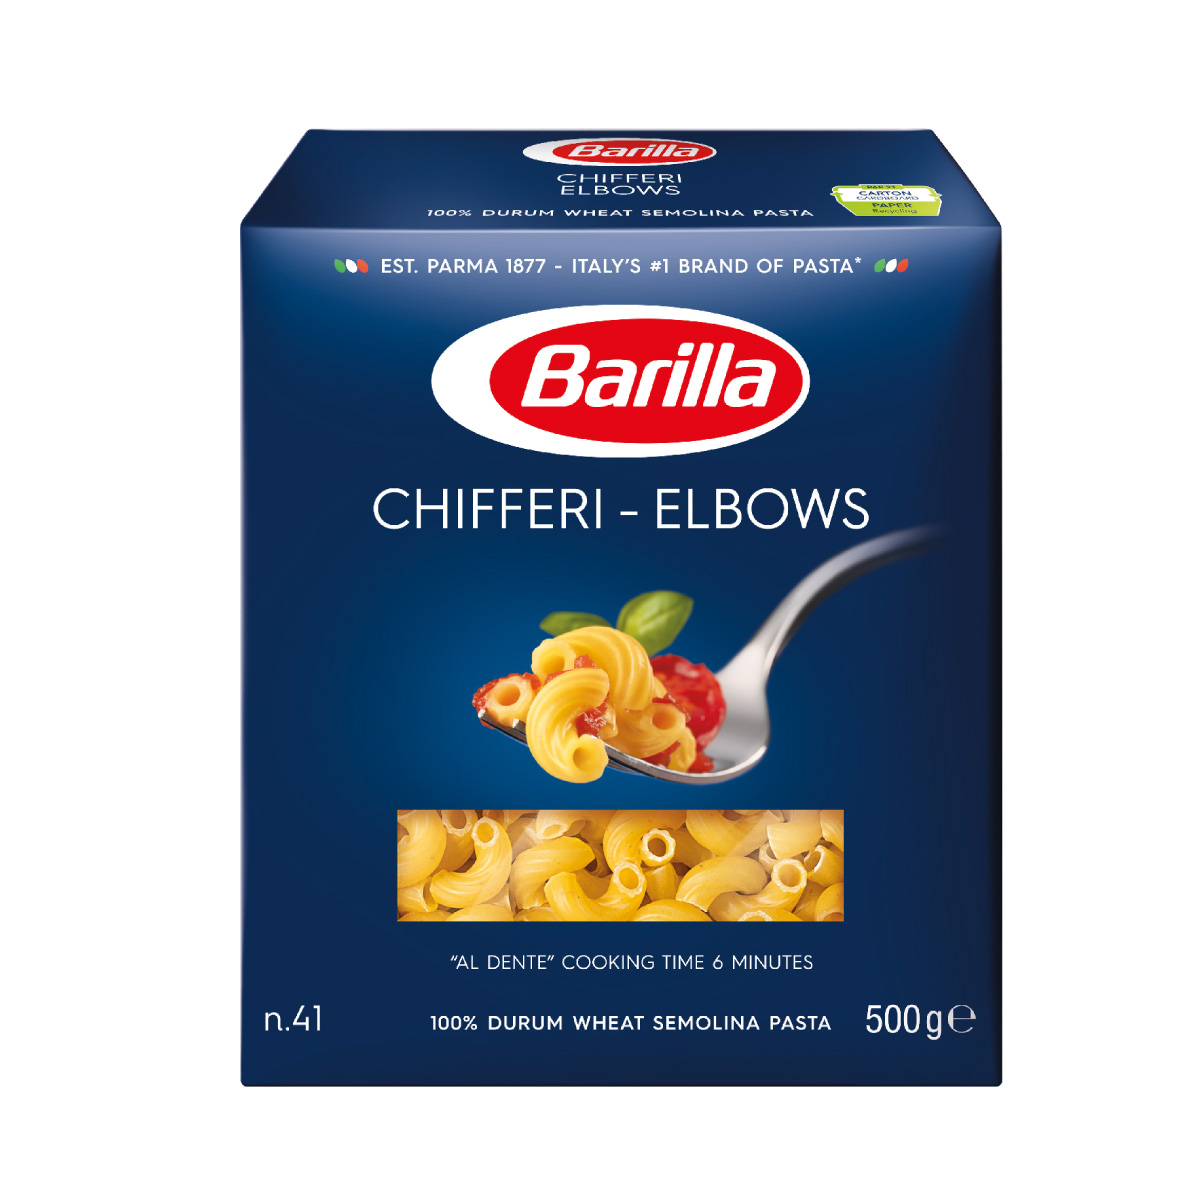 Barilla Chifferi-Elbows Pasta 500g